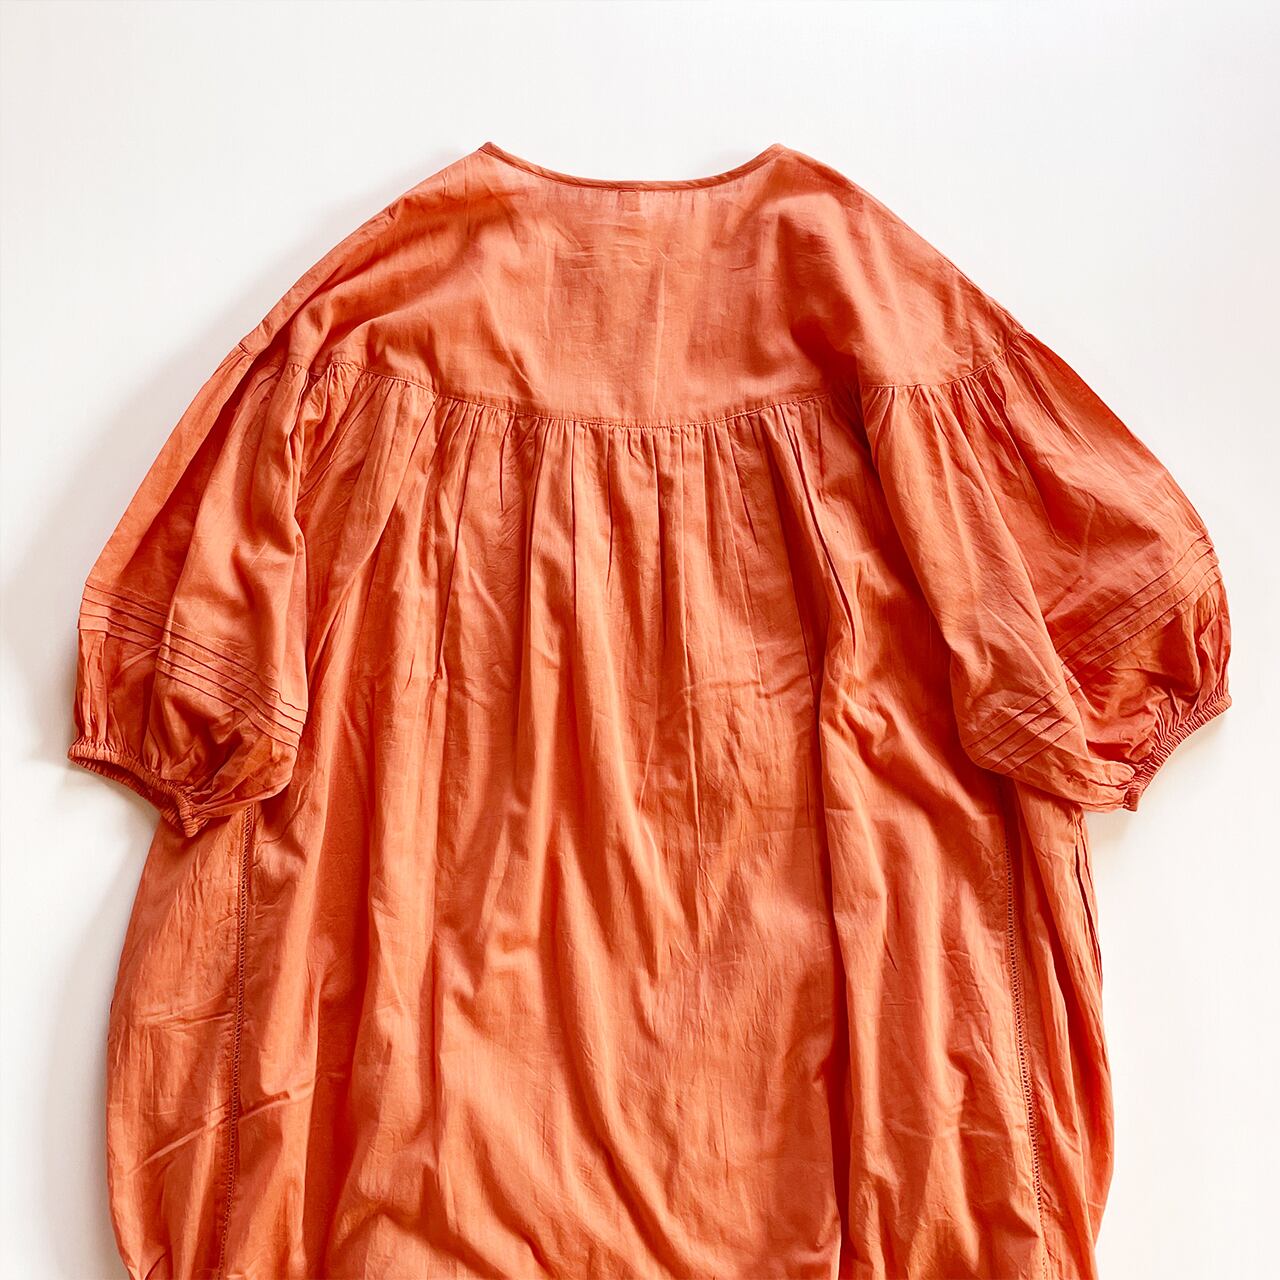 Apricot tiered dress